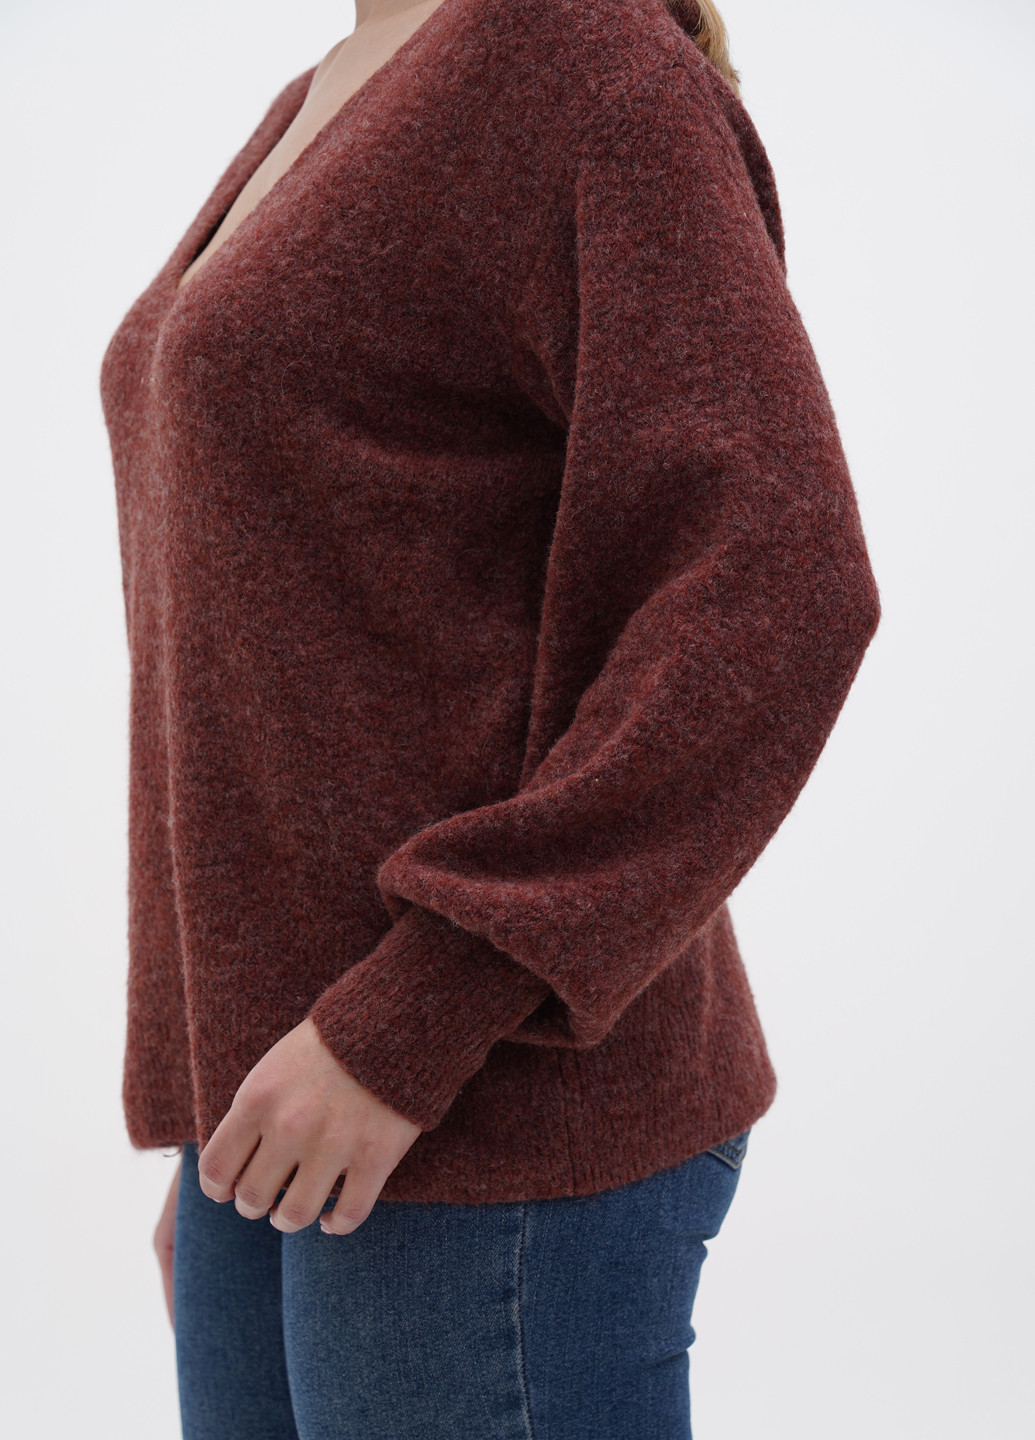 Коричневый демисезонный пуловер пуловер Cream